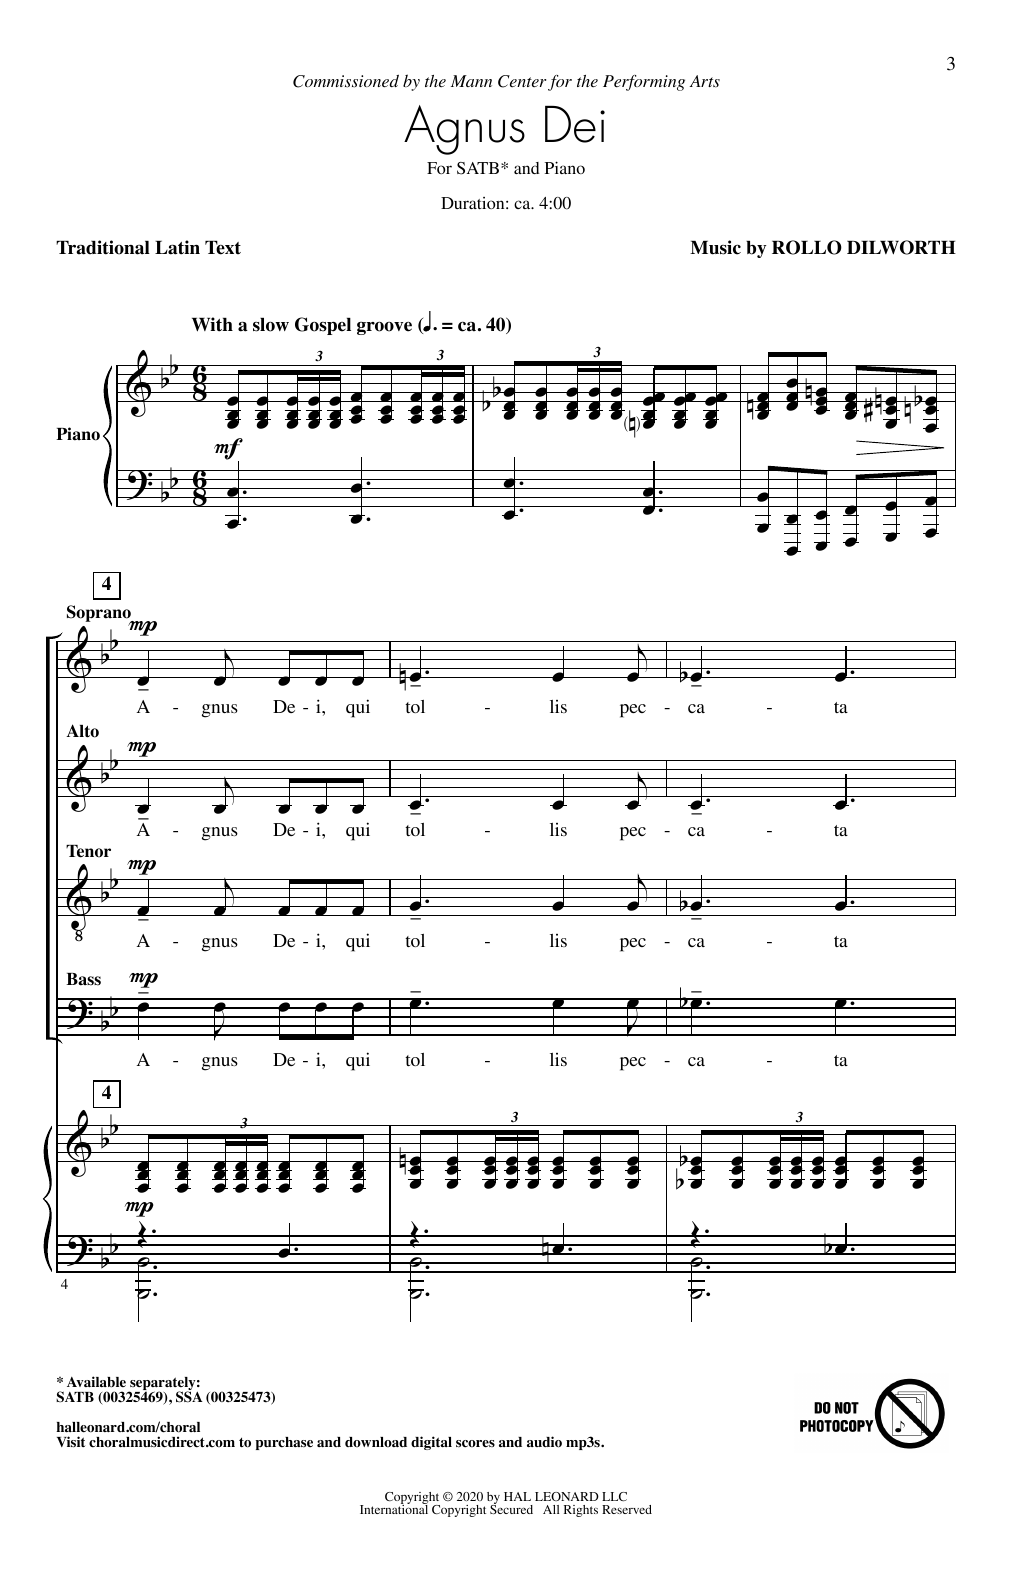 Rollo Dilworth Agnus Dei Sheet Music Notes & Chords for SATB Choir - Download or Print PDF